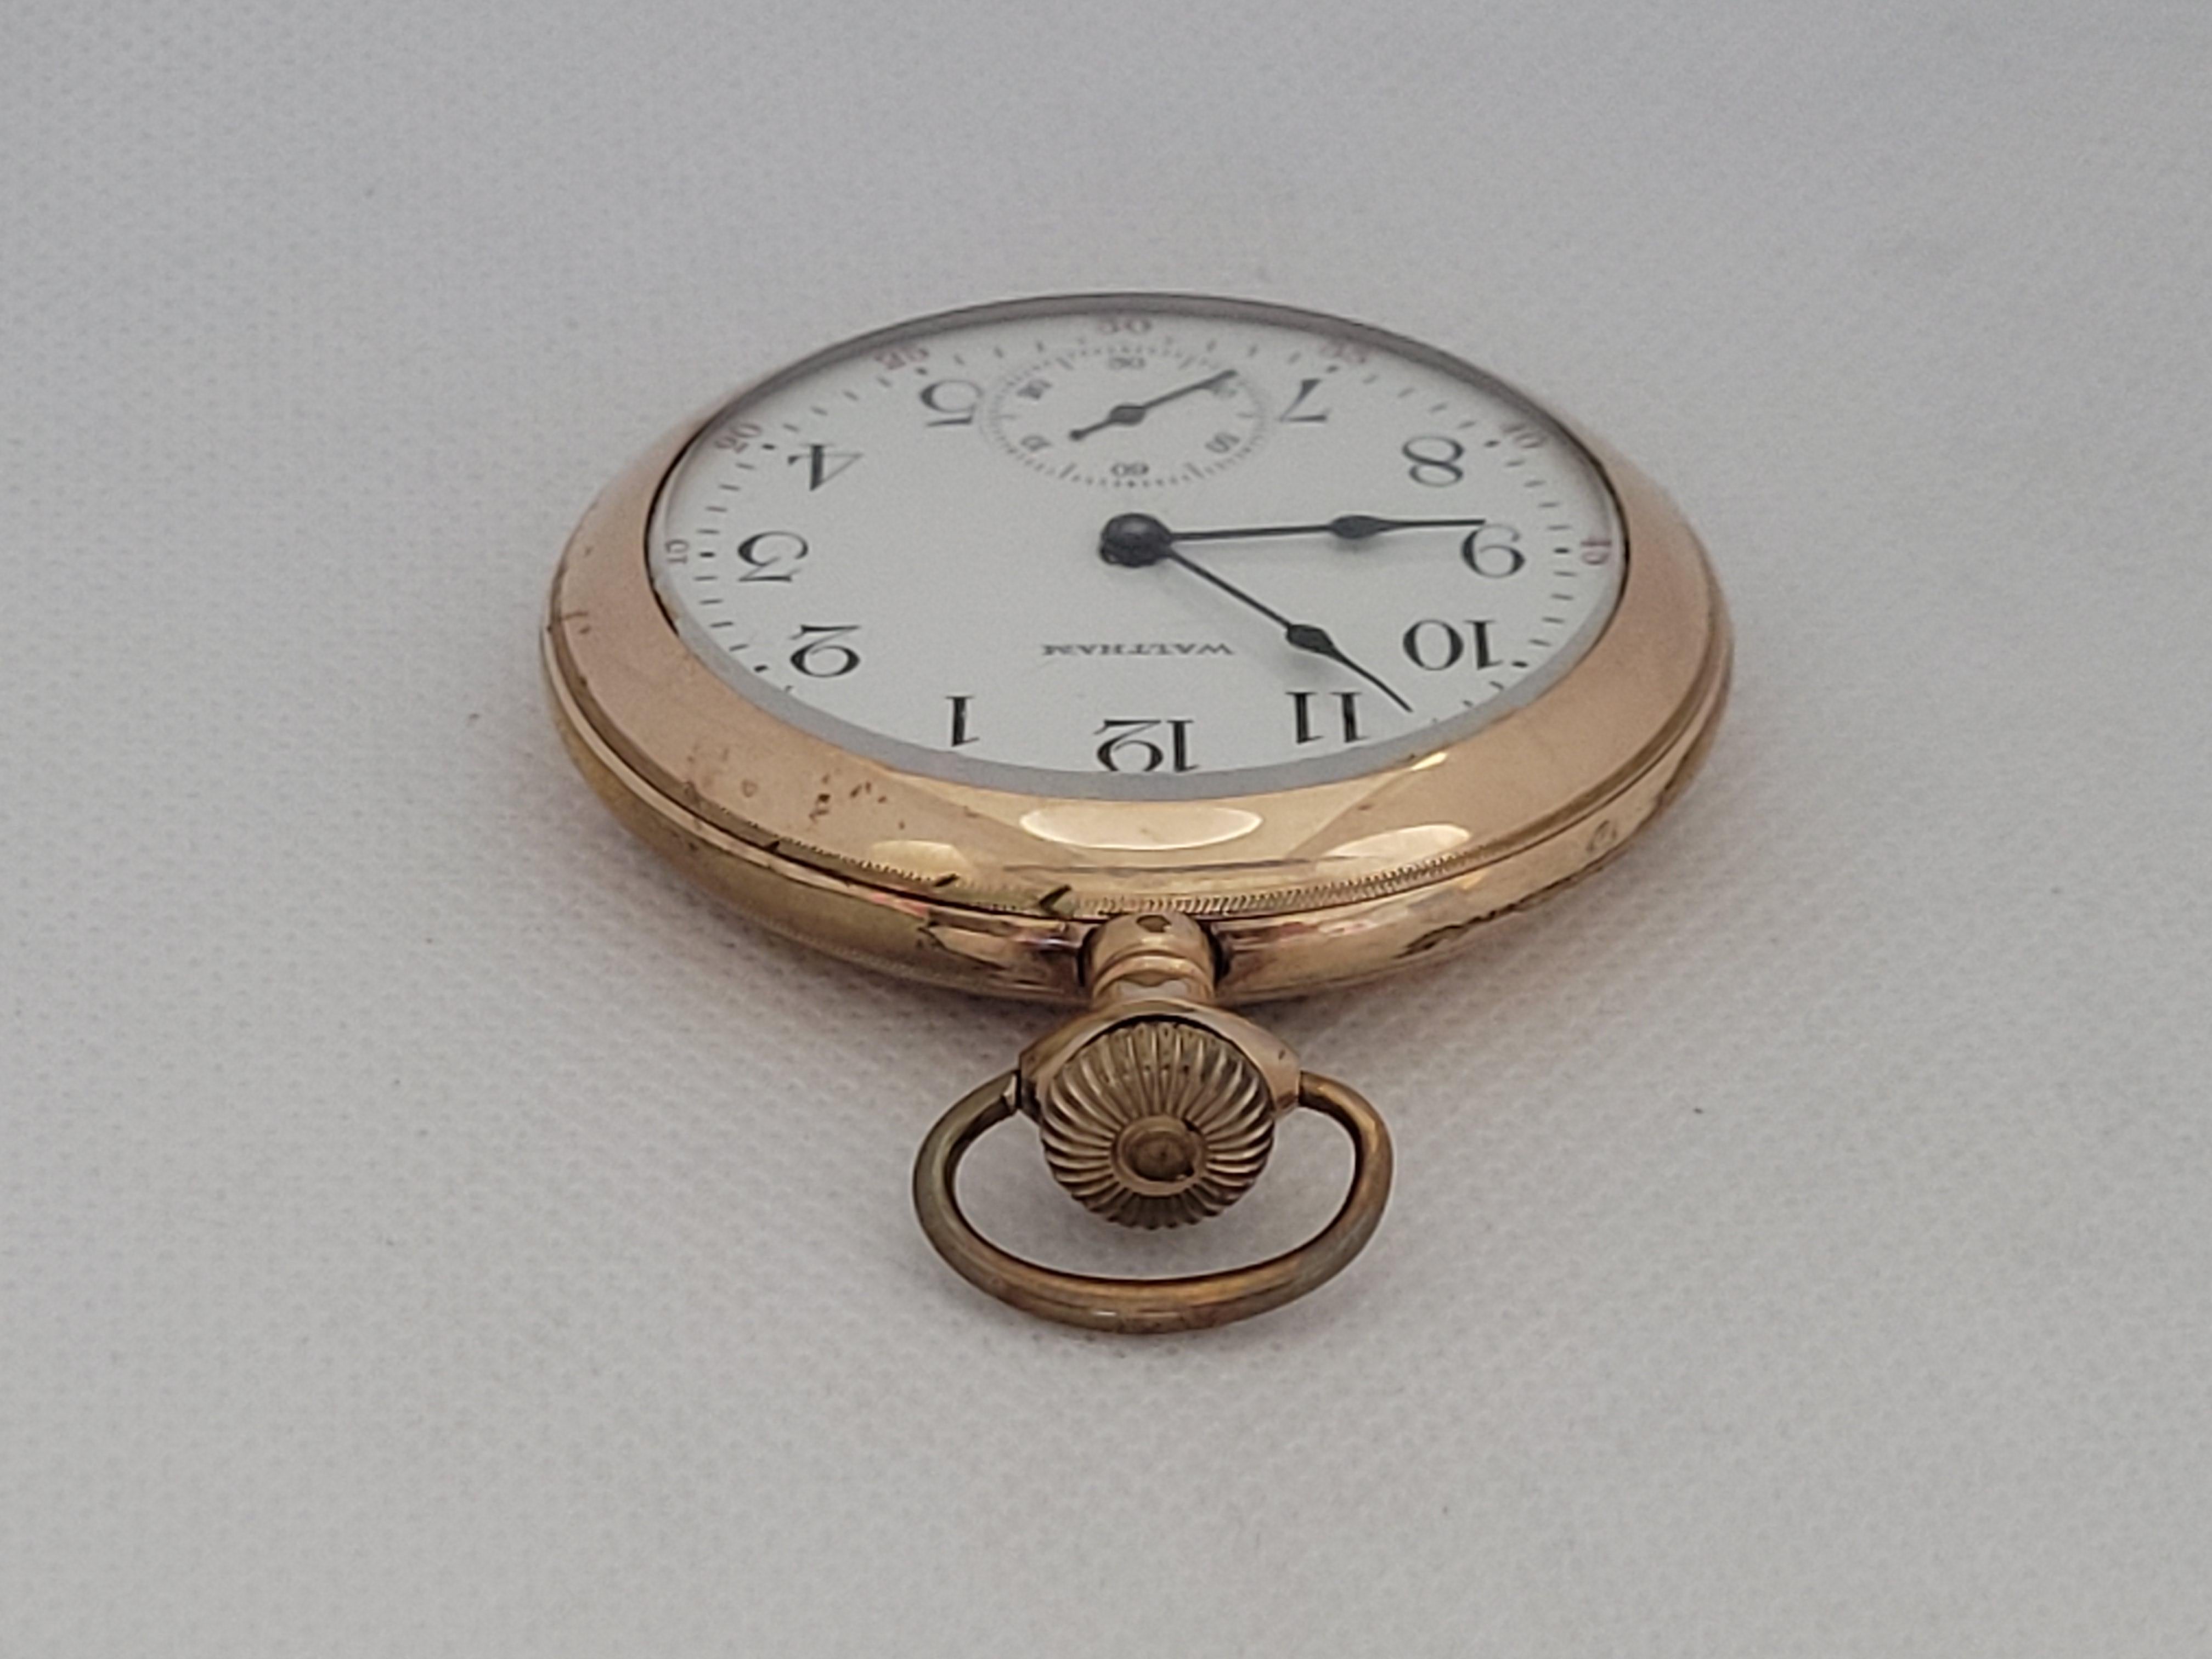 Edwardian Waltham Pocket Watch Gold Plated Year 1908 Working Jewel 16804744